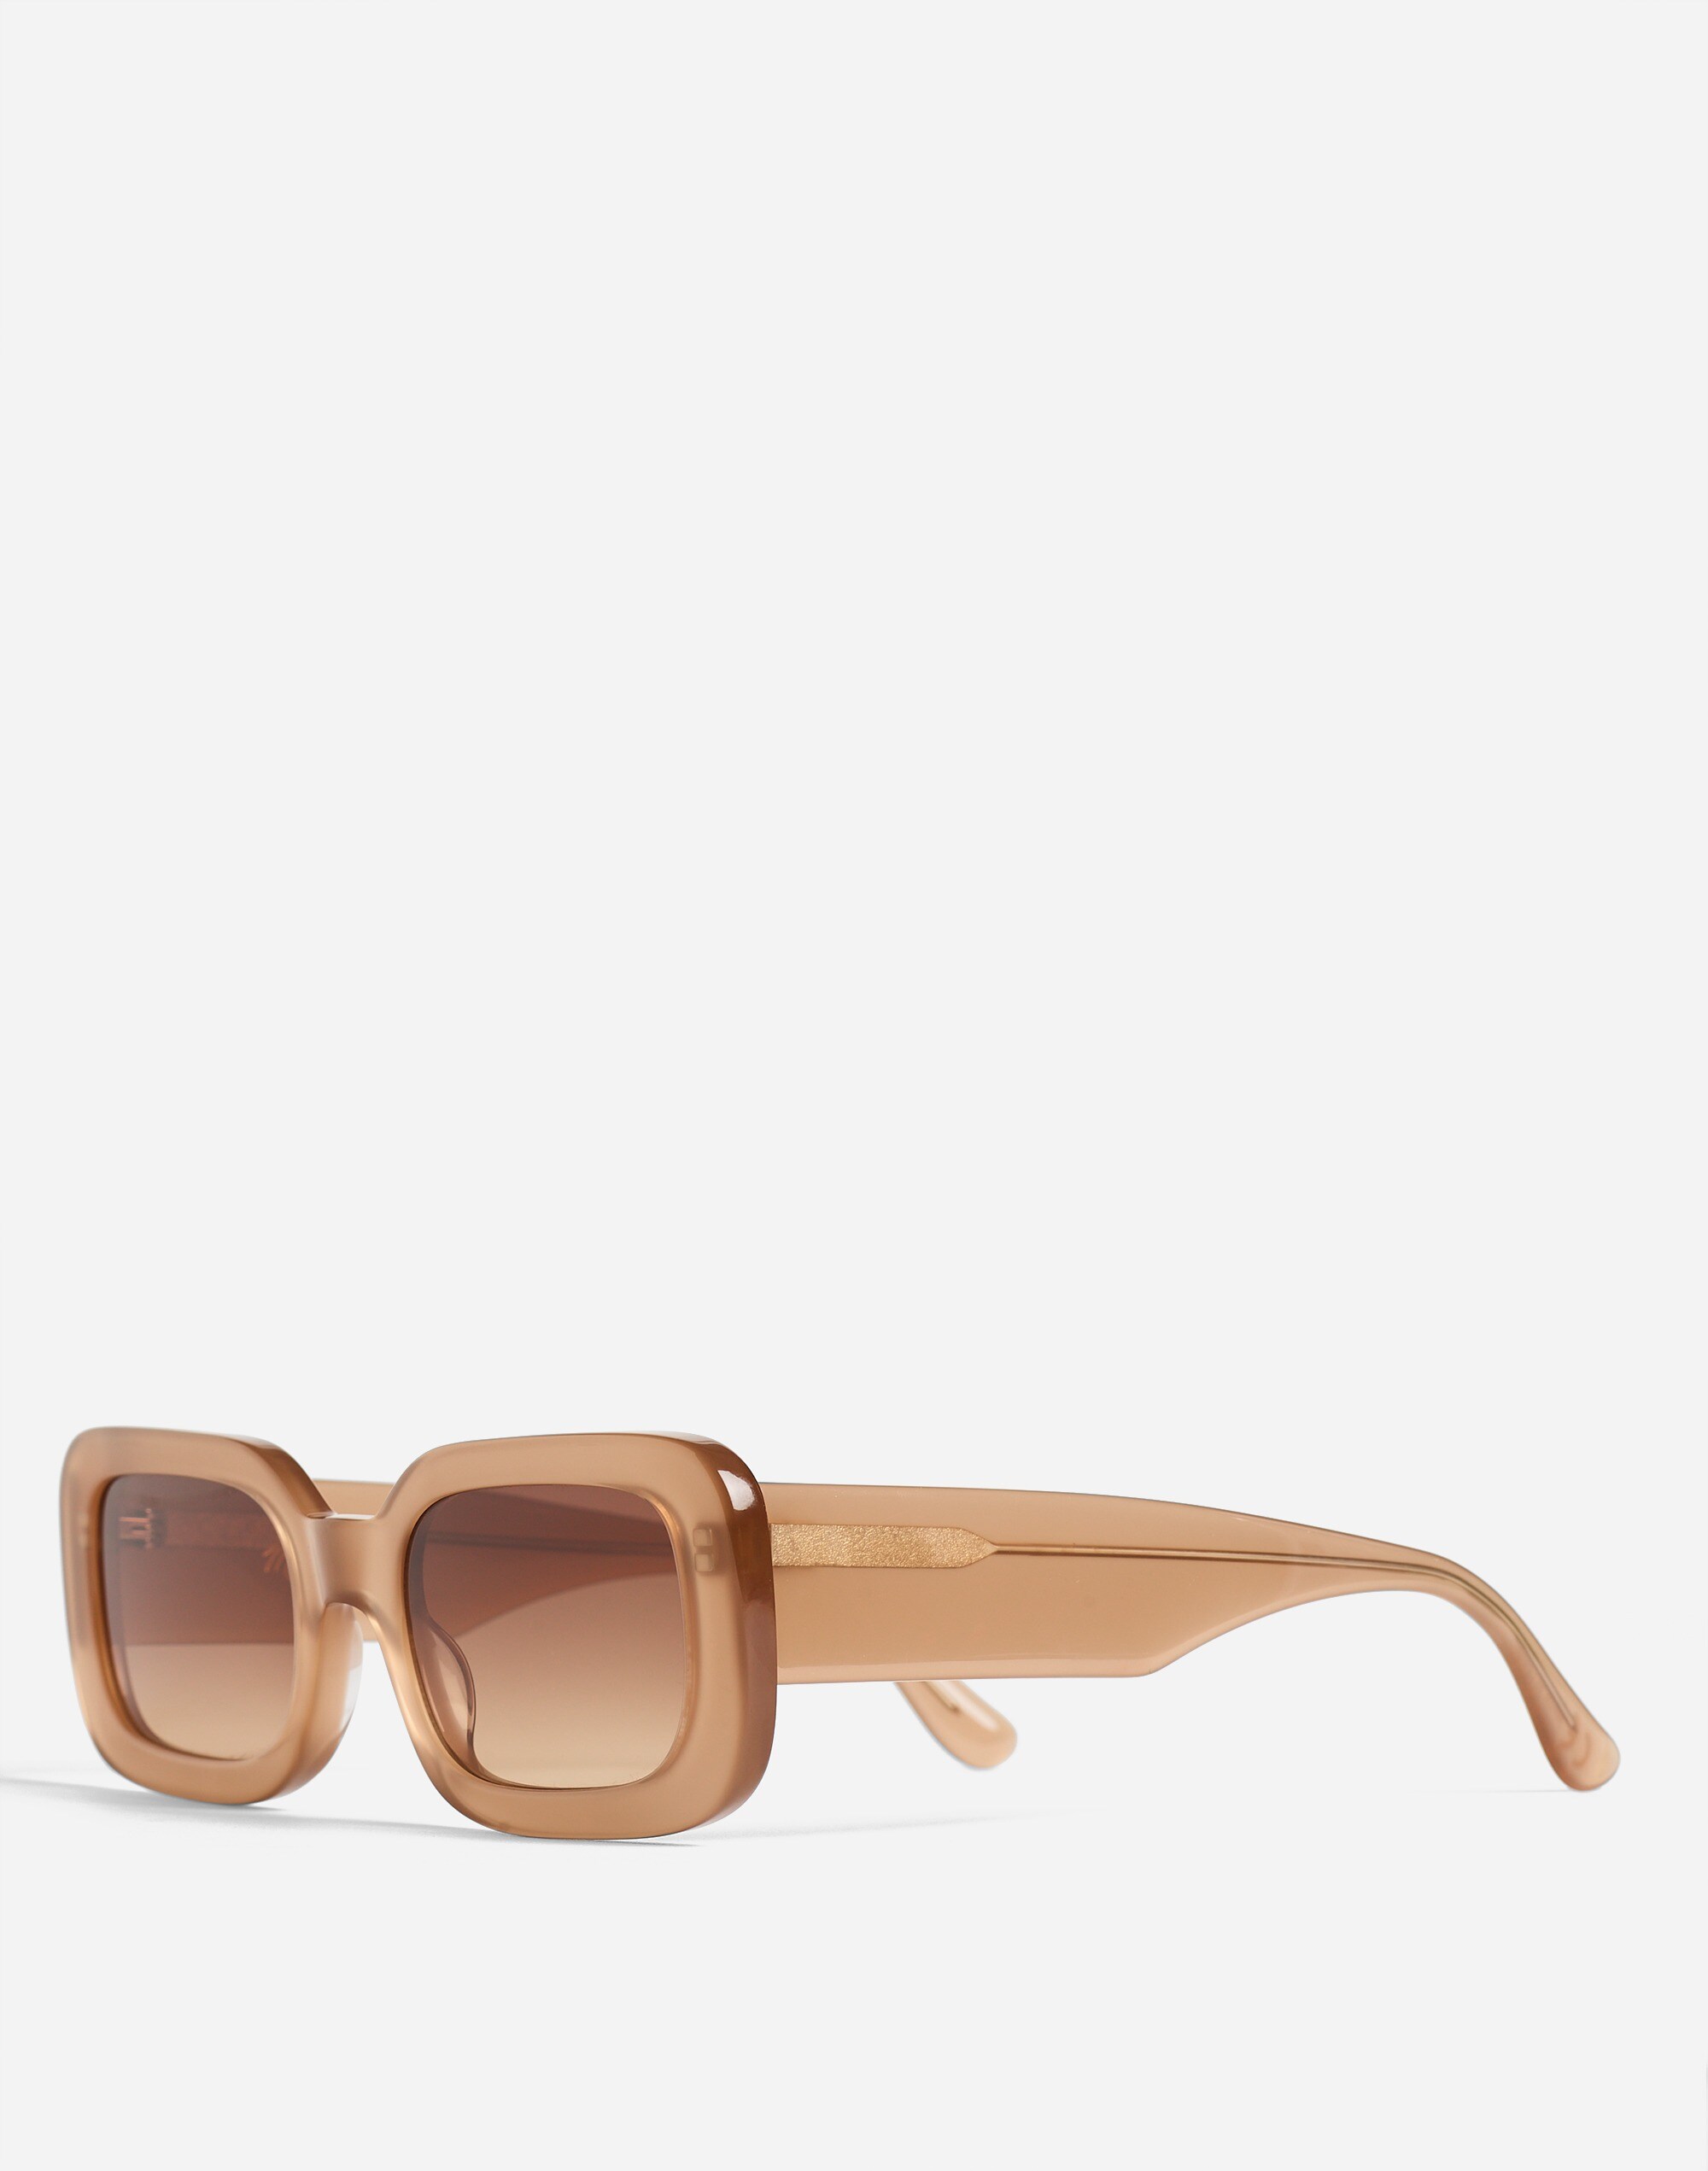 Mw Linbrook Sunglasses In Marine Pearl